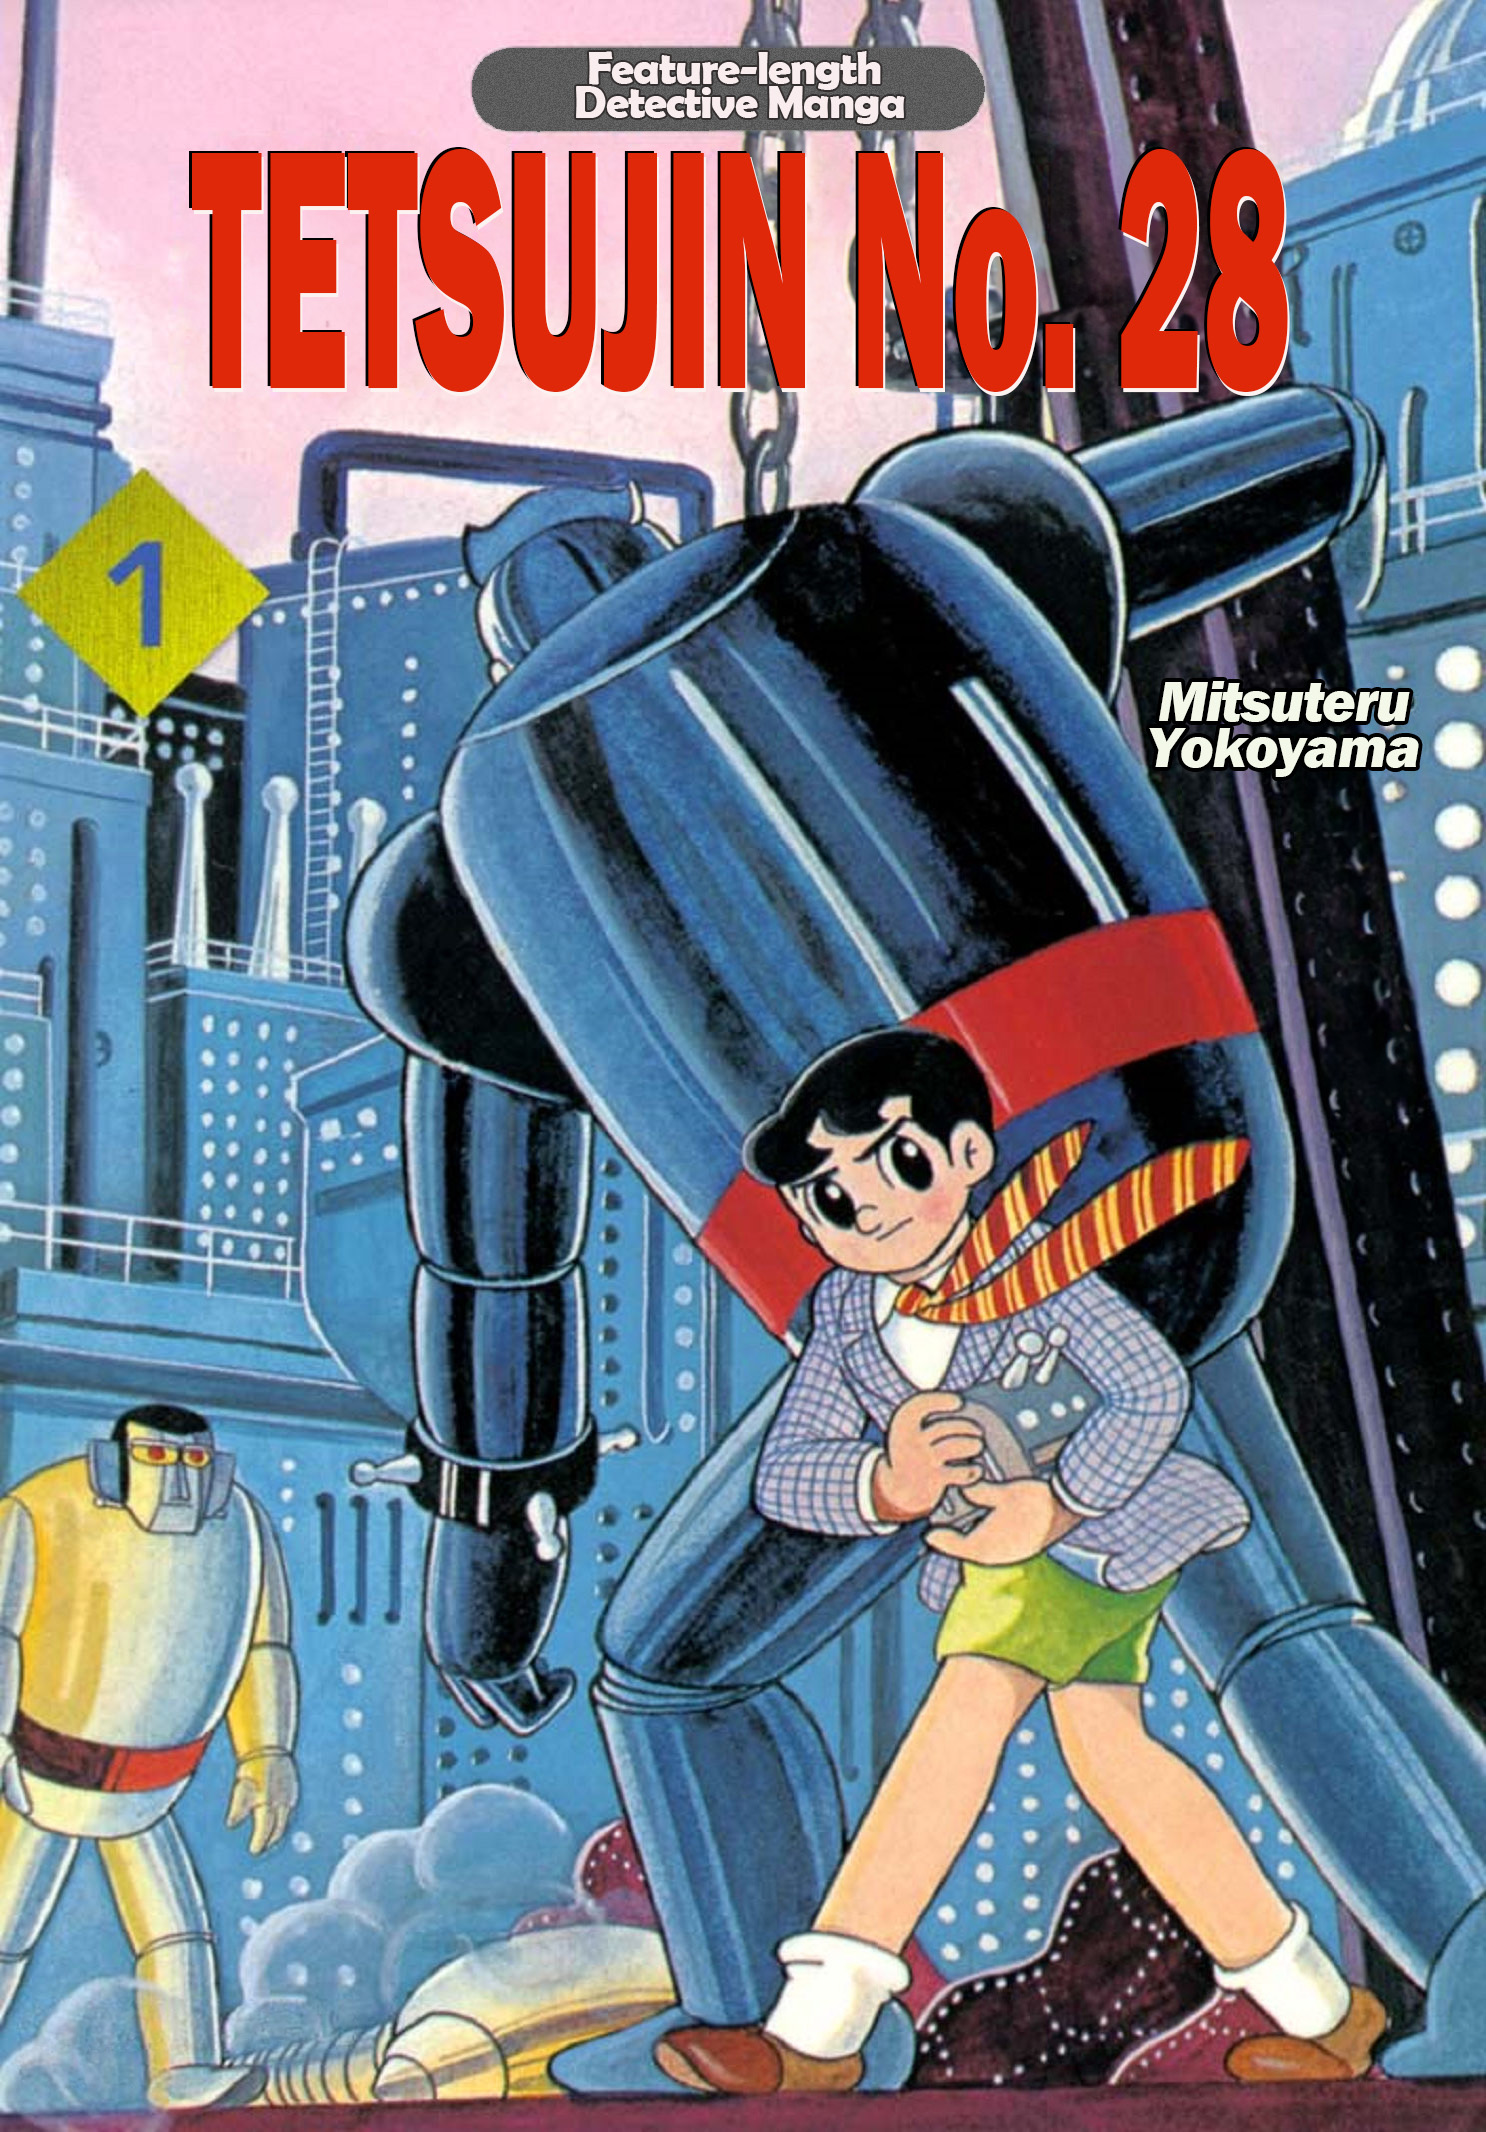 Tetsujin No. 28 Full Length Detective Manga Vol.1 Chapter 1